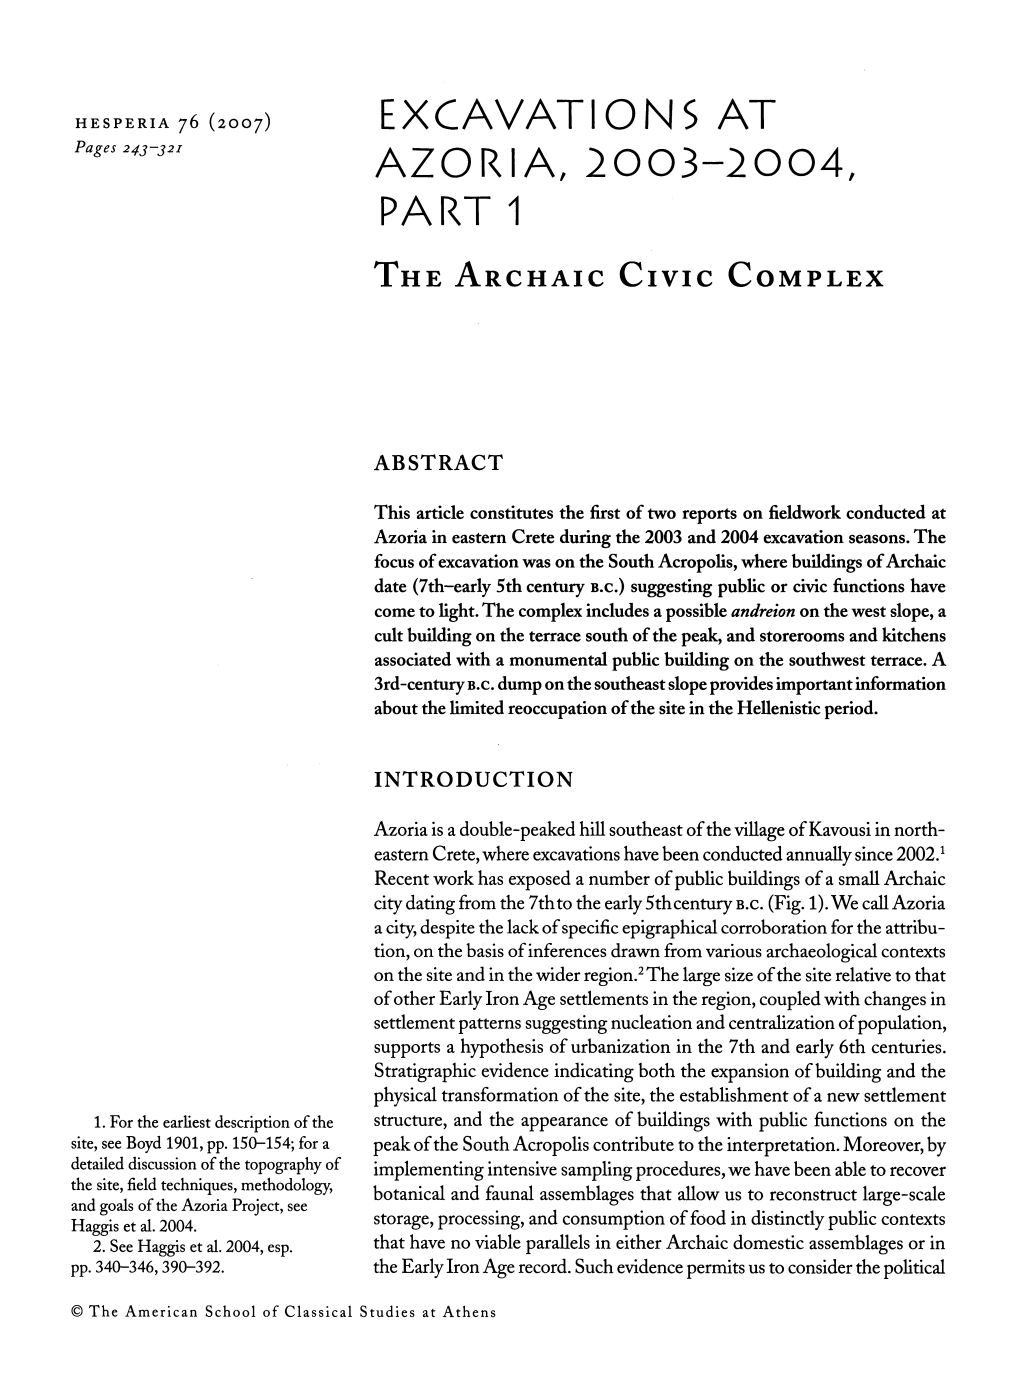 Excavations at Azoria, 2003-2004, Part 1: the Archaic Civic Complex